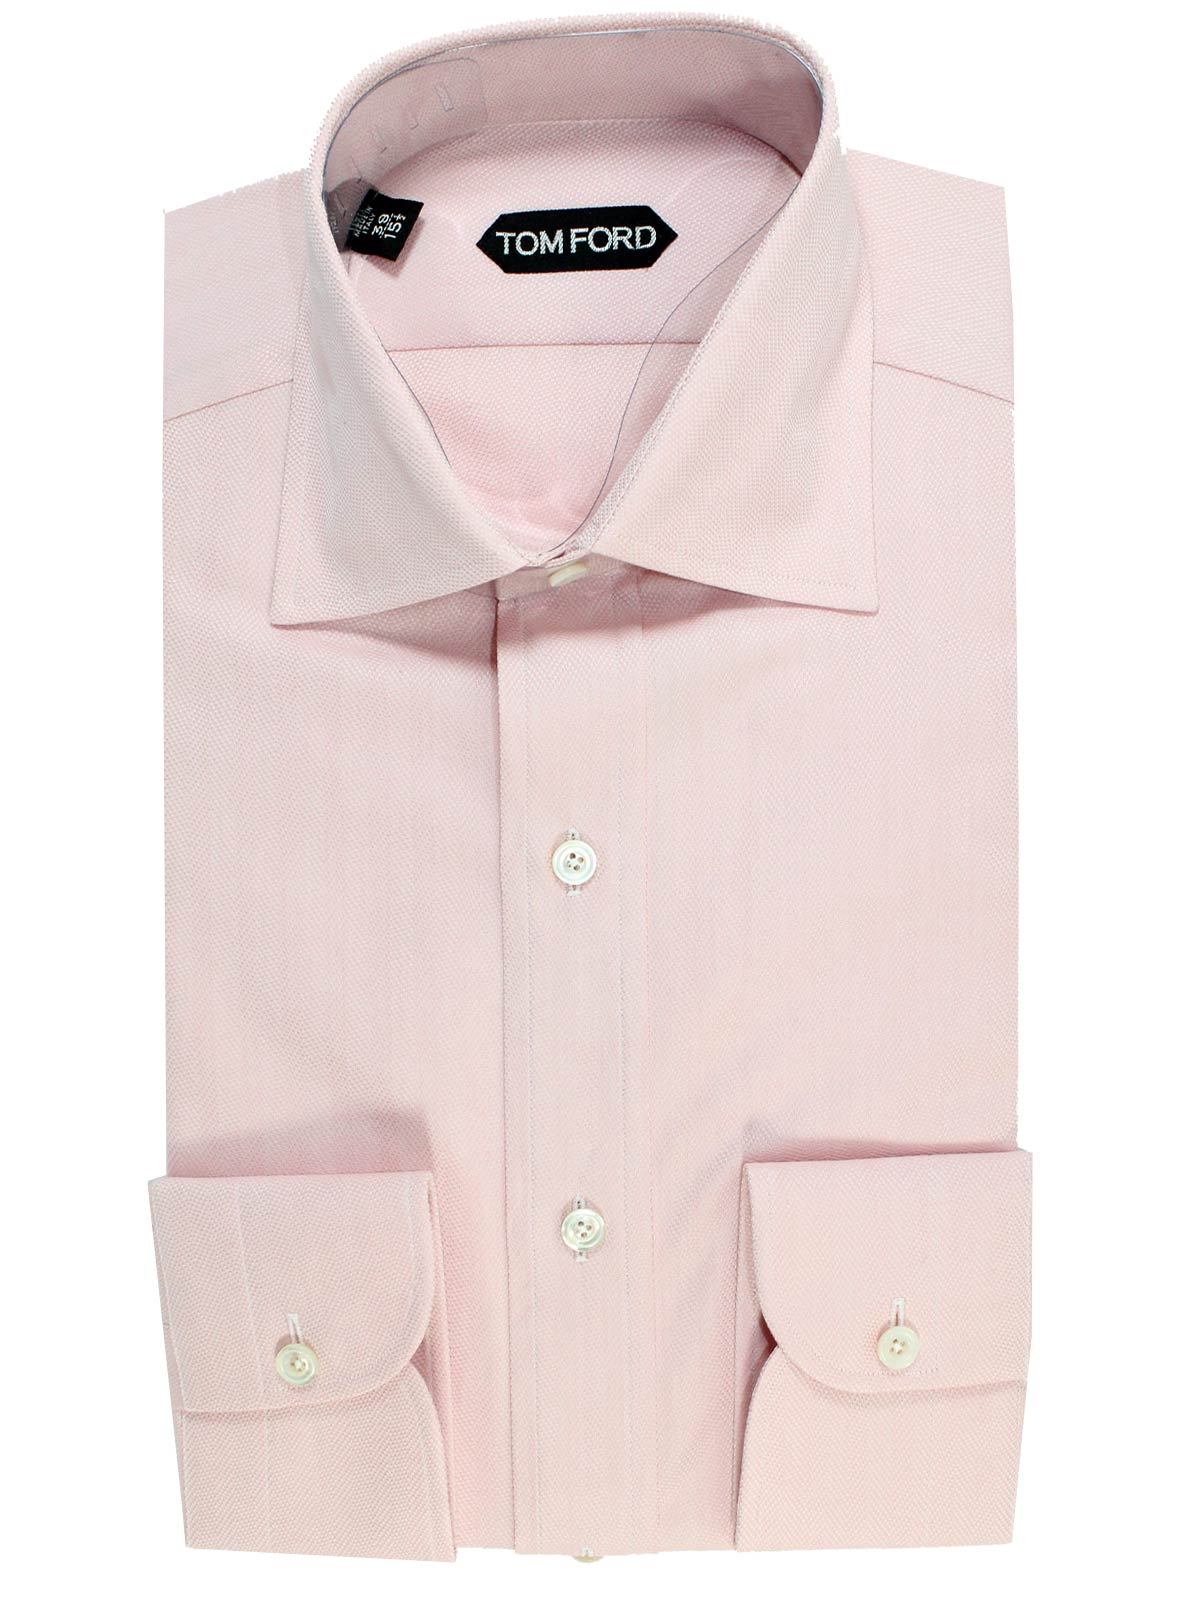 Tom Ford Ties Sale | Bow Ties | Dress Shirts SALE - Tie Deals